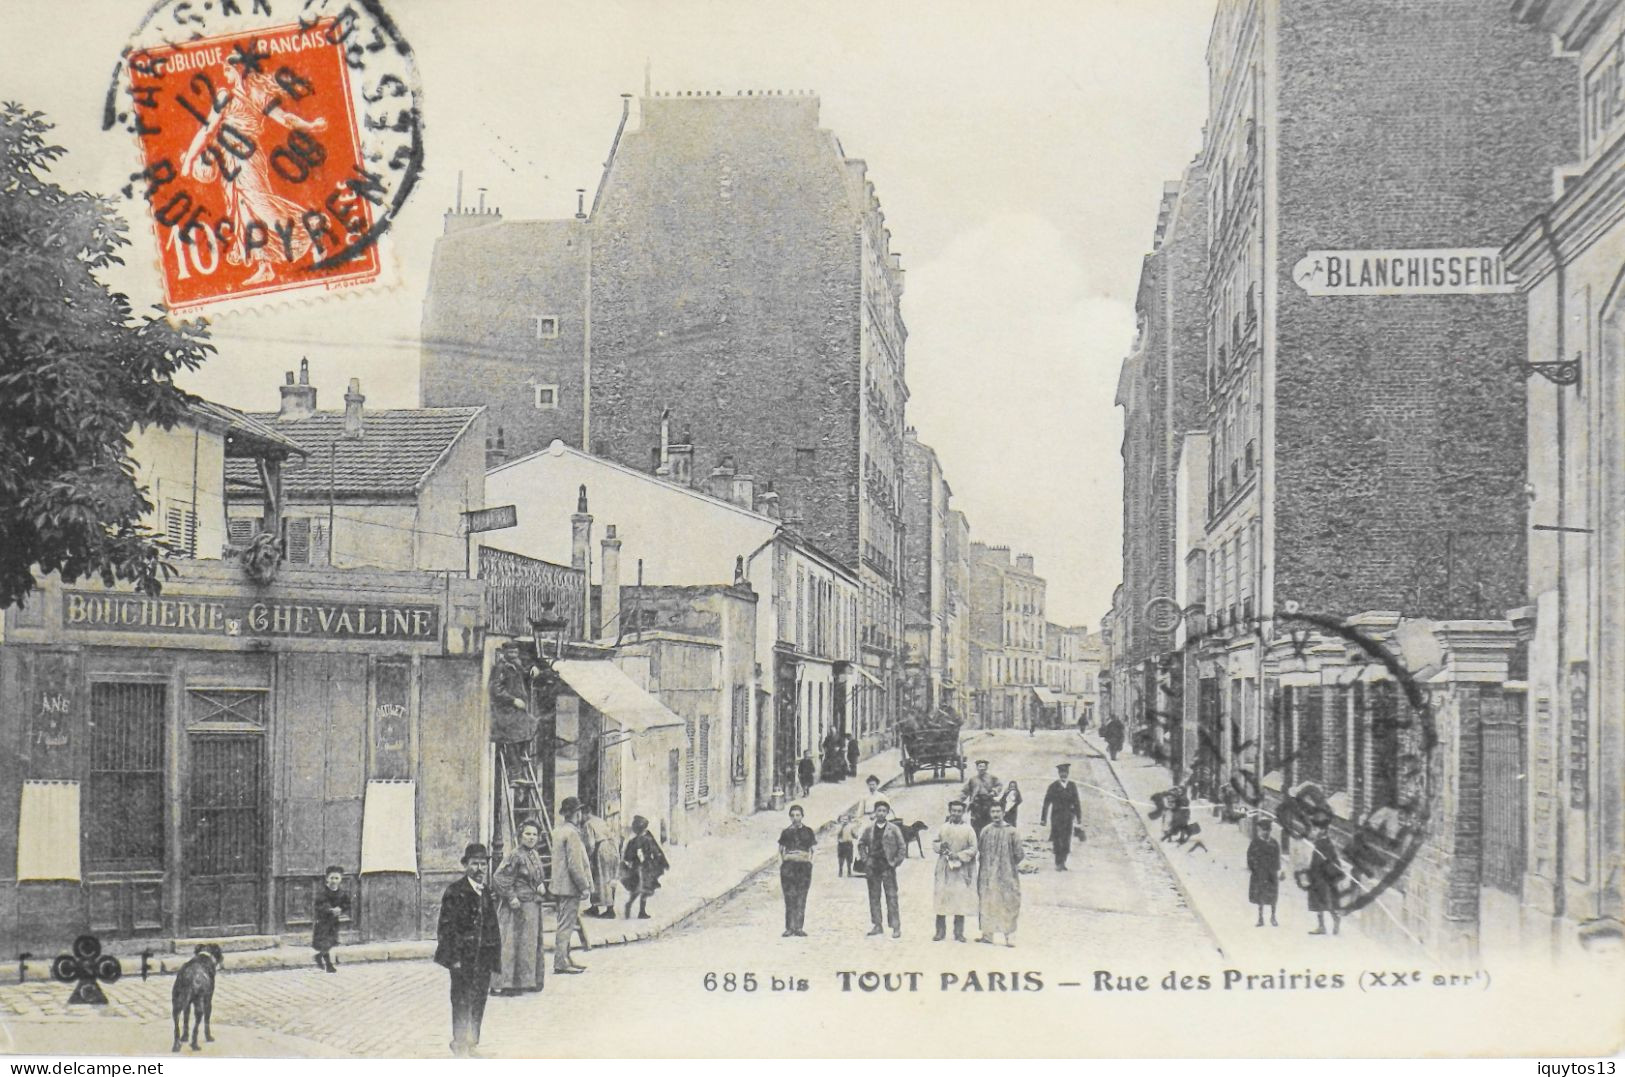 CPA. [75] > TOUT PARIS > N° 685 Bis - RUE DES PRAIRIES - ALLUMEUR DE REVERBERE - (XXe Arrt.) - 1909 - TBE - Paris (20)